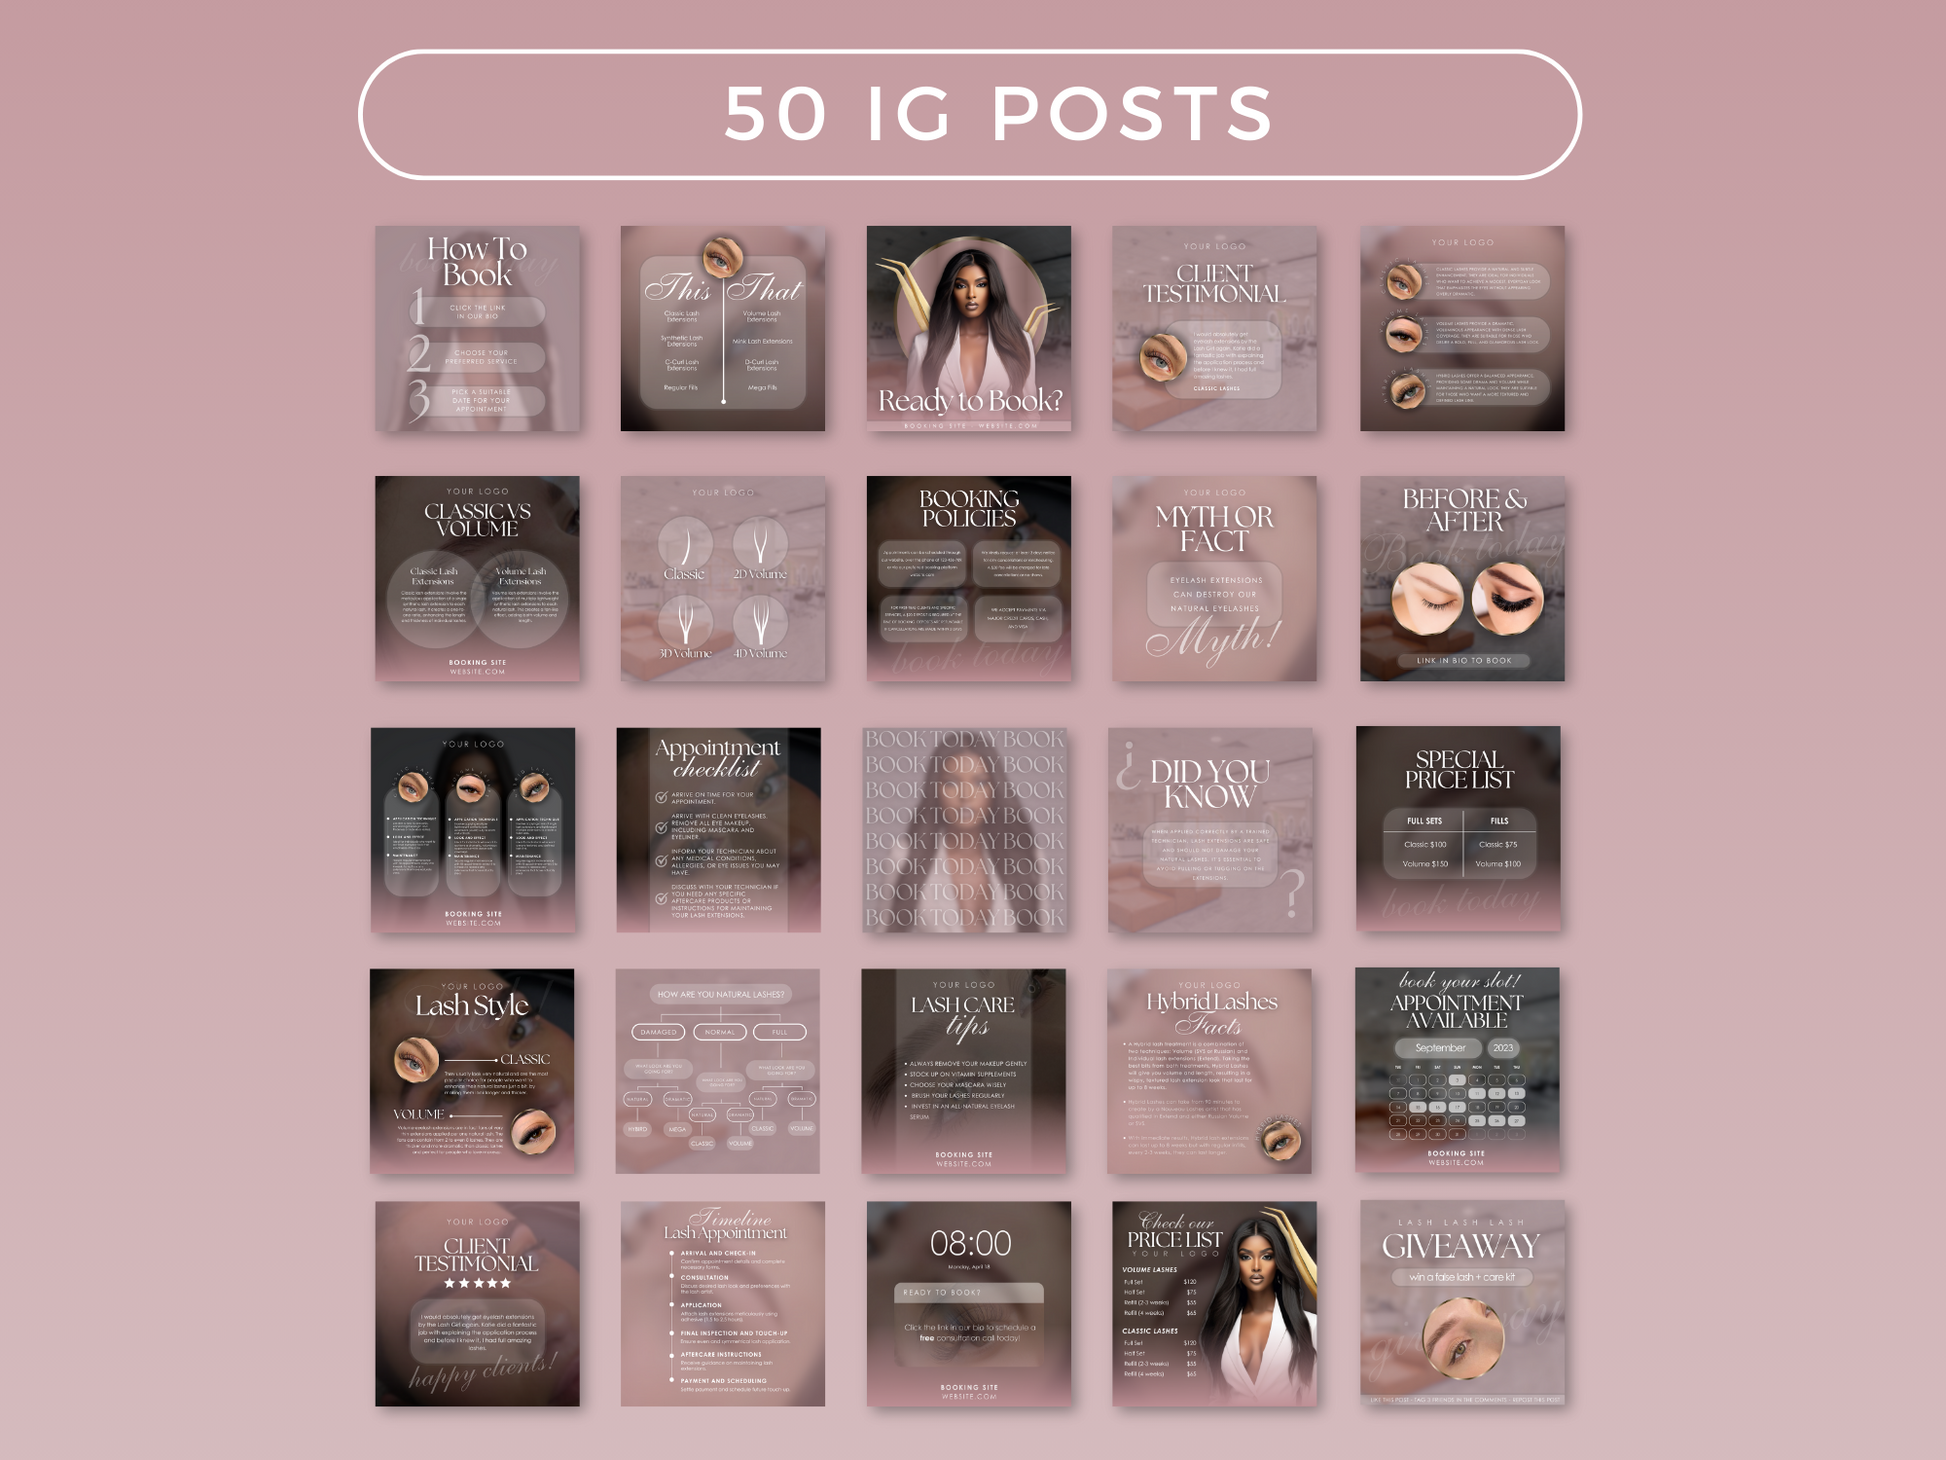 Gold & Pink Lash Tech Instagram Kit - Shaima Studio